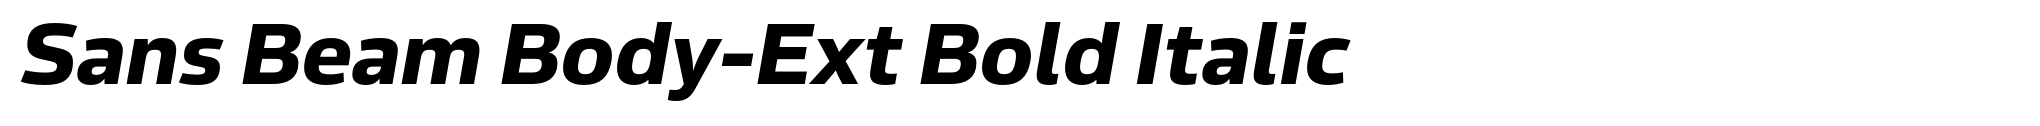 Sans Beam Body-Ext Bold Italic image